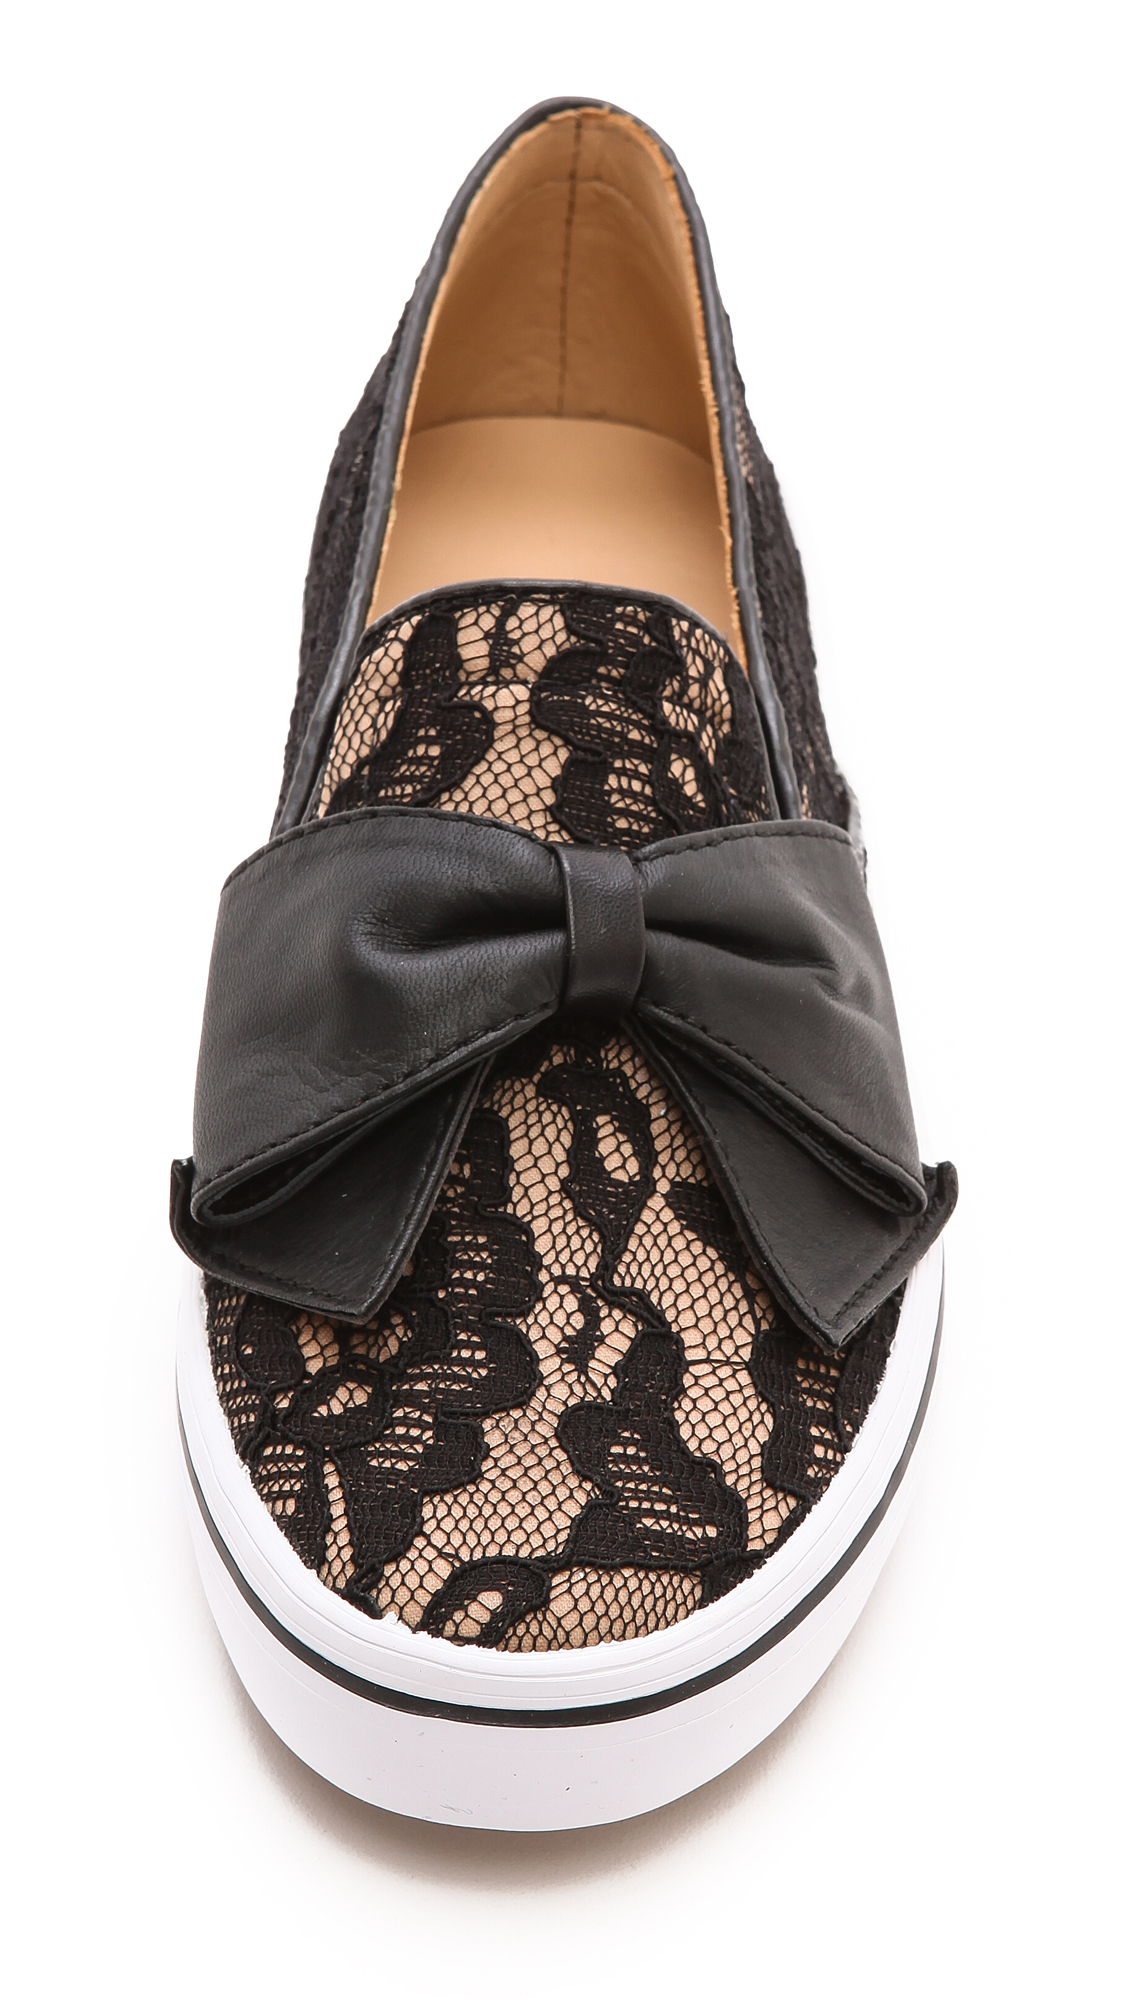 Kate Spade New York Black Delise Bow Slip On Sneakers Blackblack Product 1 21210801 0 401327277 Normal 